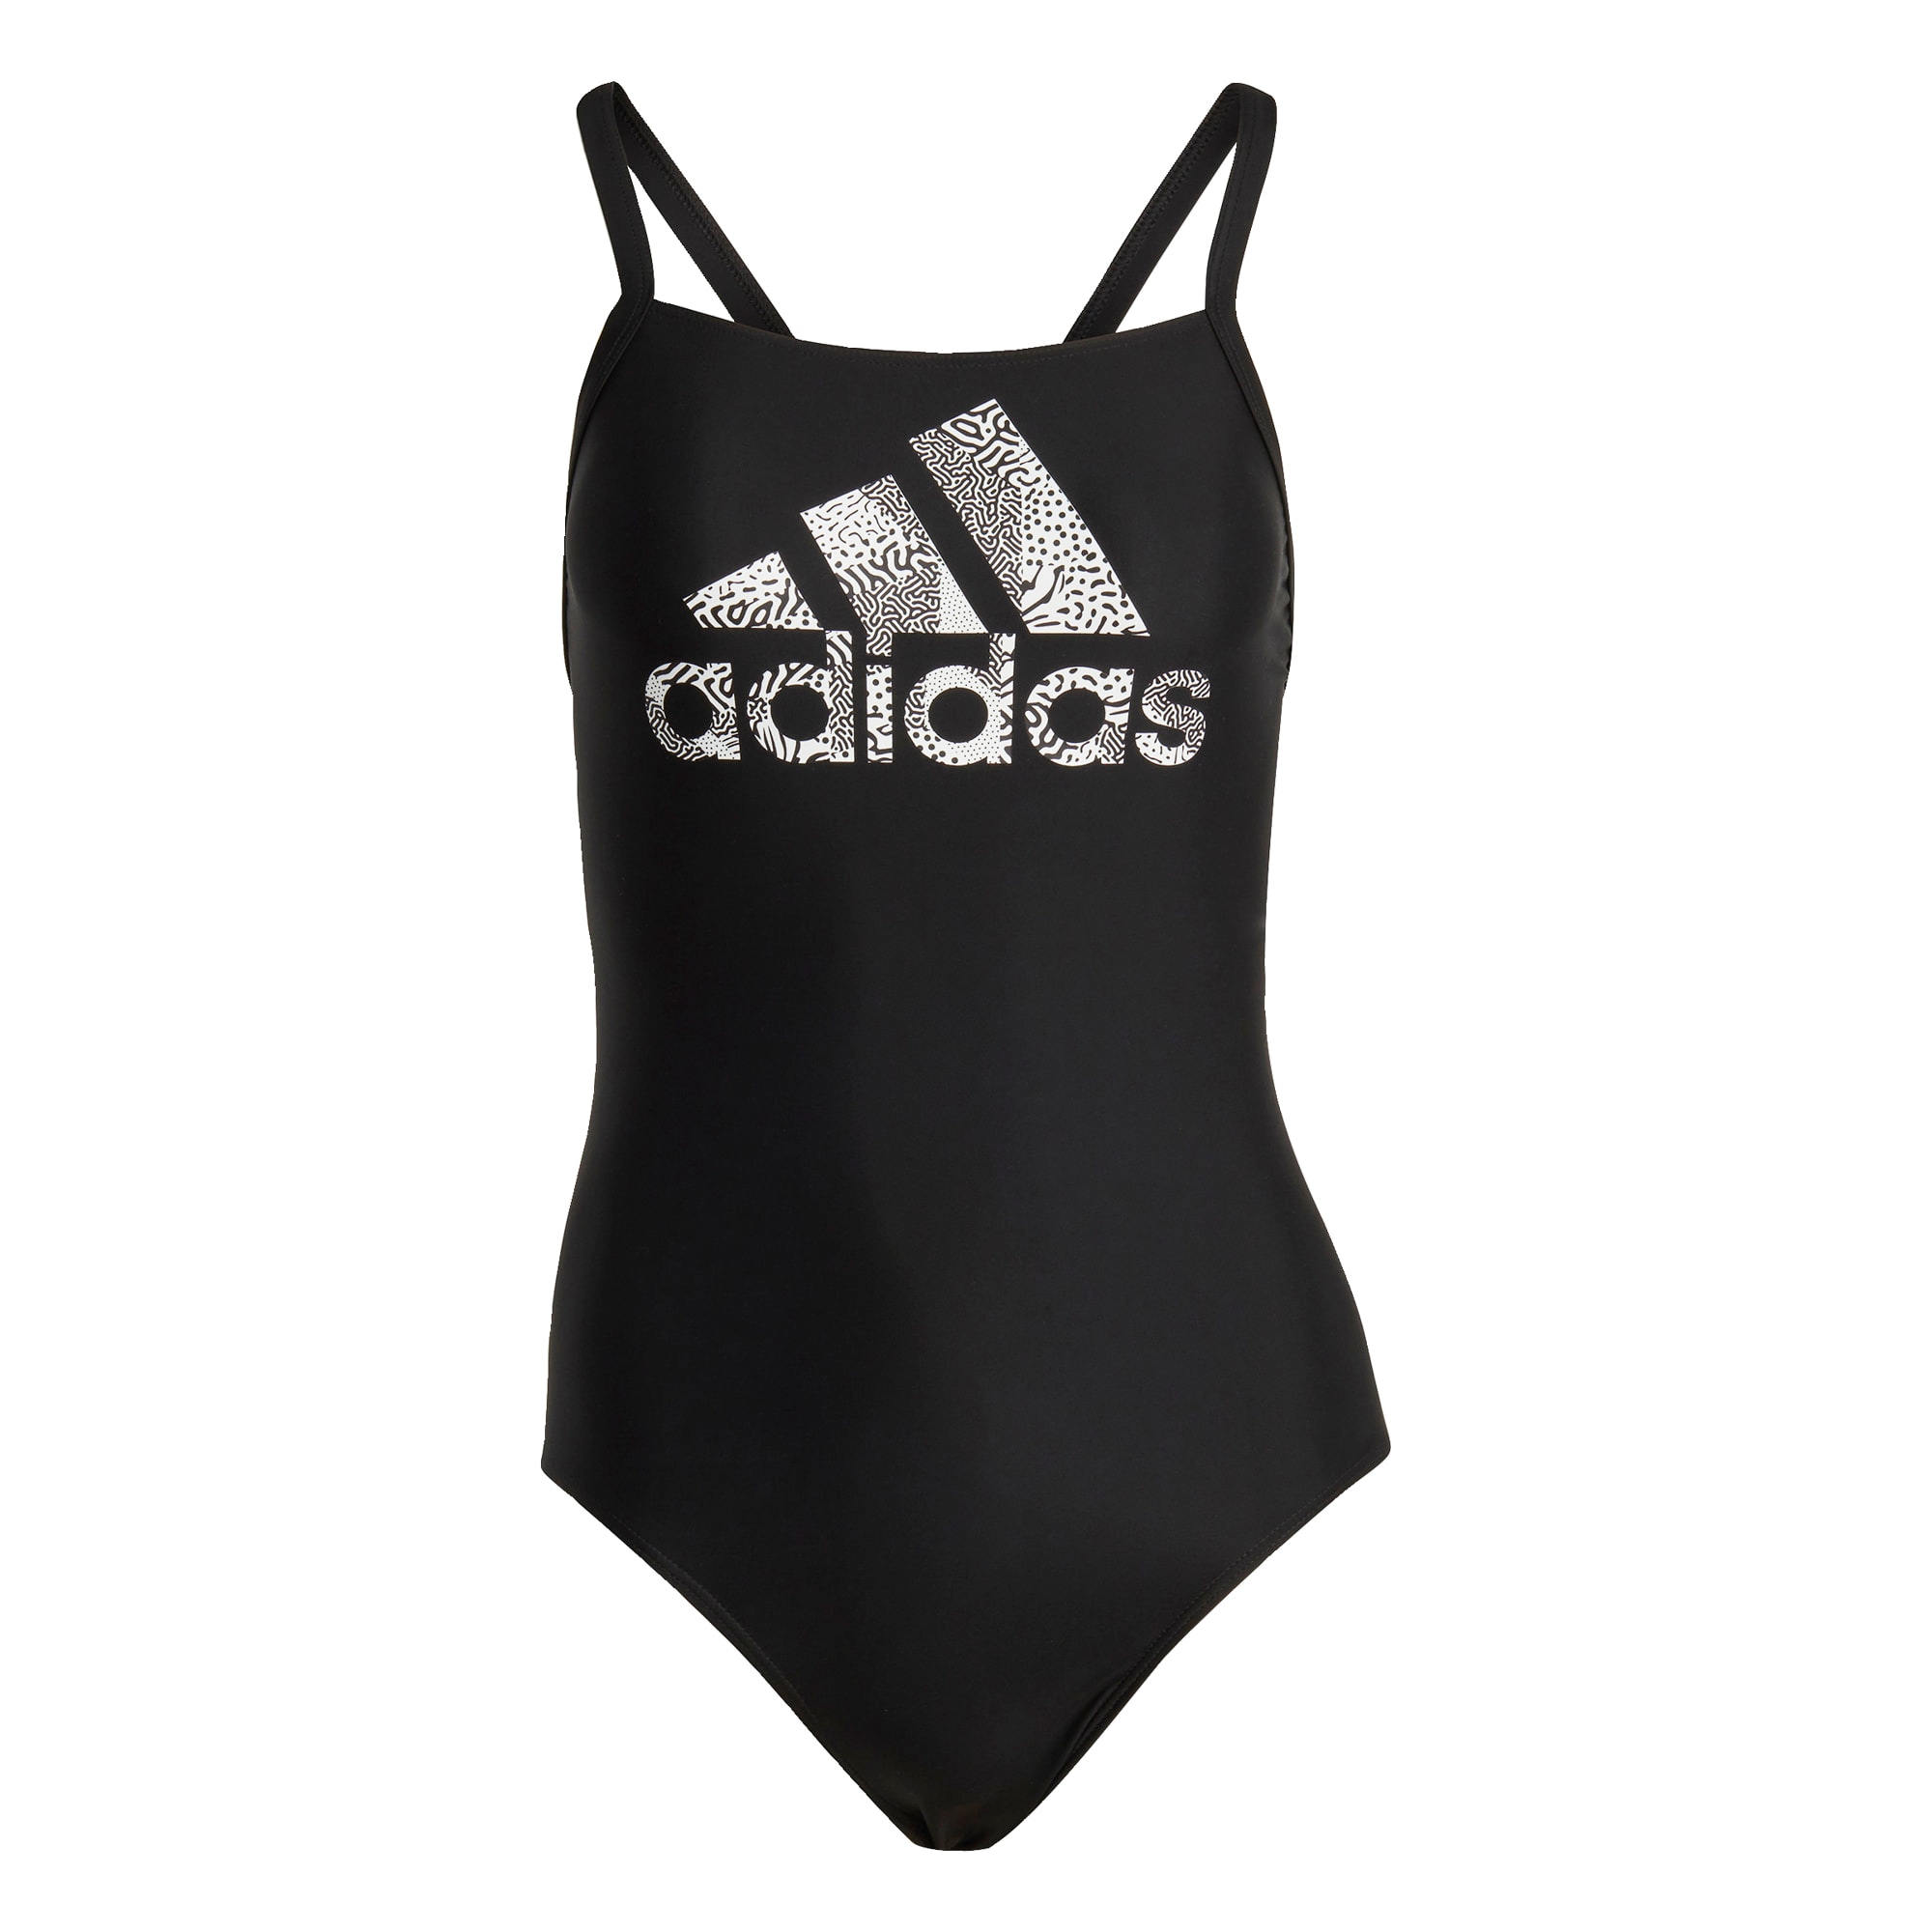 ADIDAS SPORTSWEAR Športové jednodielne plavky 'Big Logo'  čierna / biela